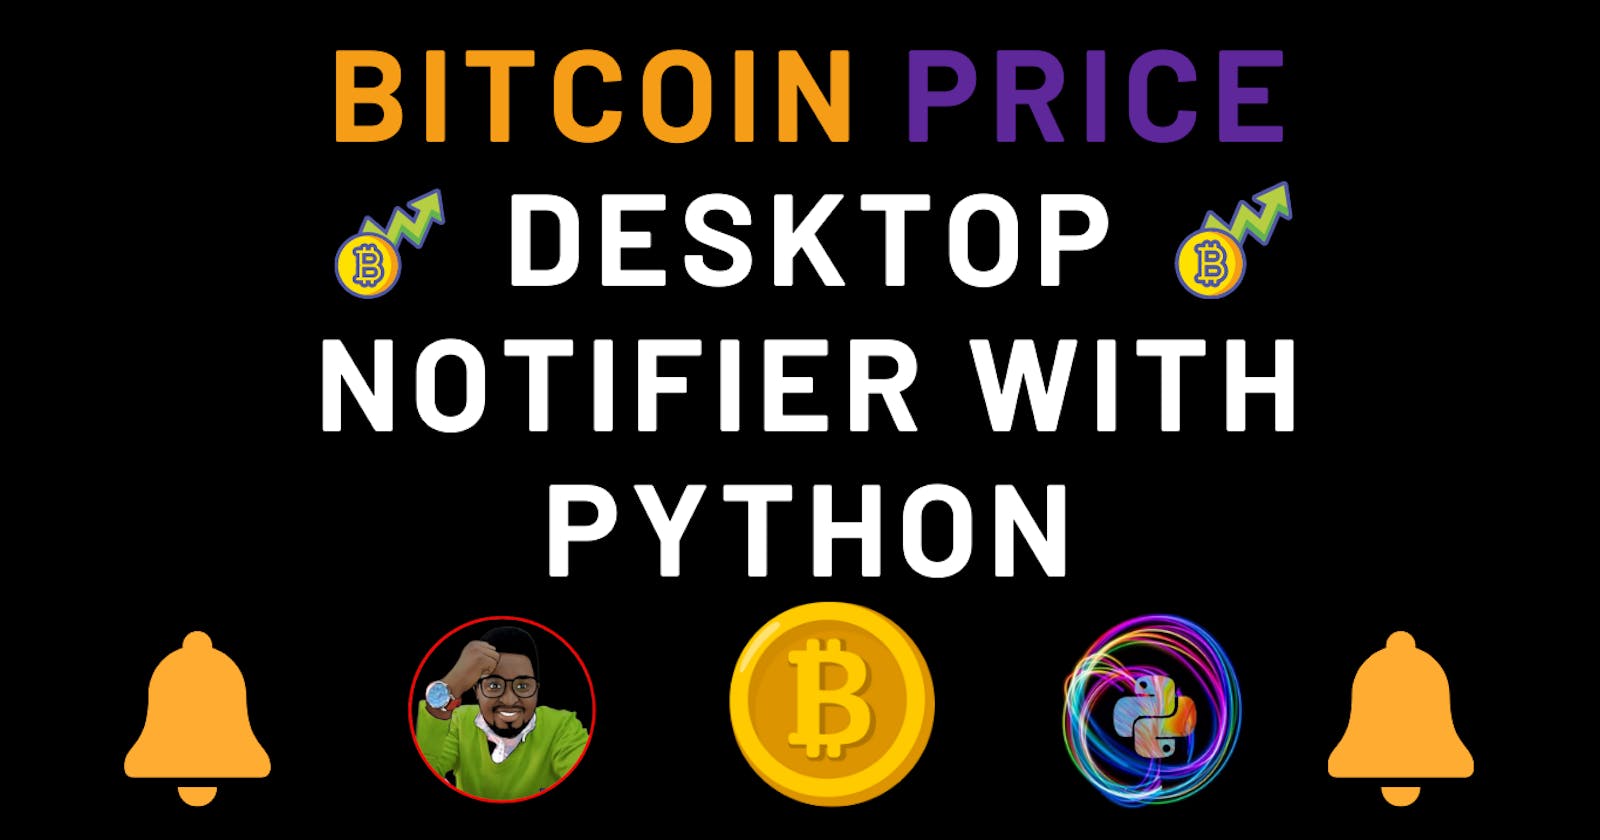 Bitcoin Price Desktop Notifier With Python